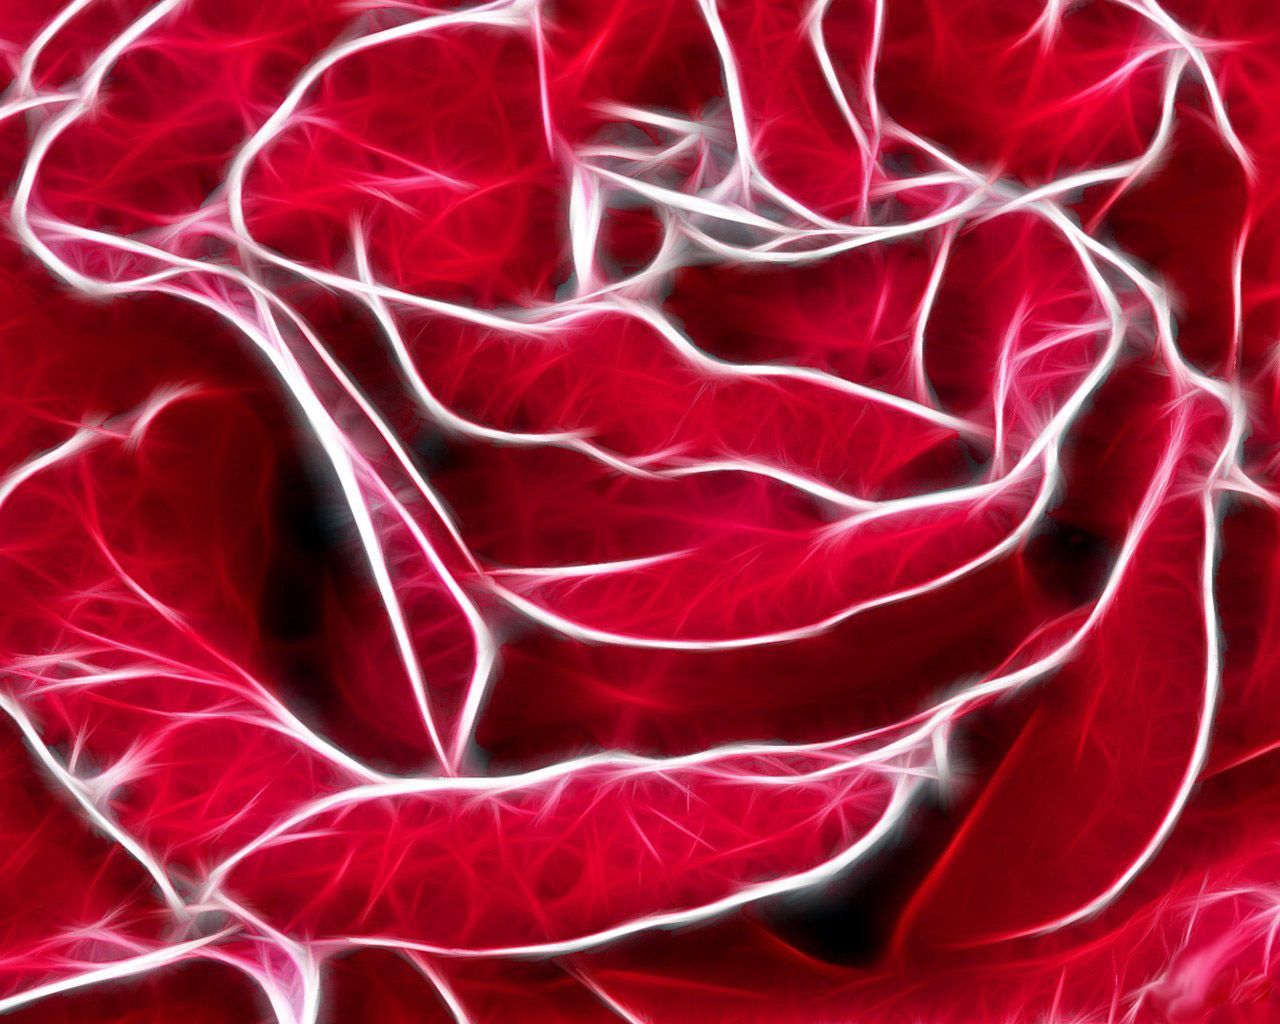 Desktop Wallpaper · Gallery · Windows 7 · Red rose - background ...